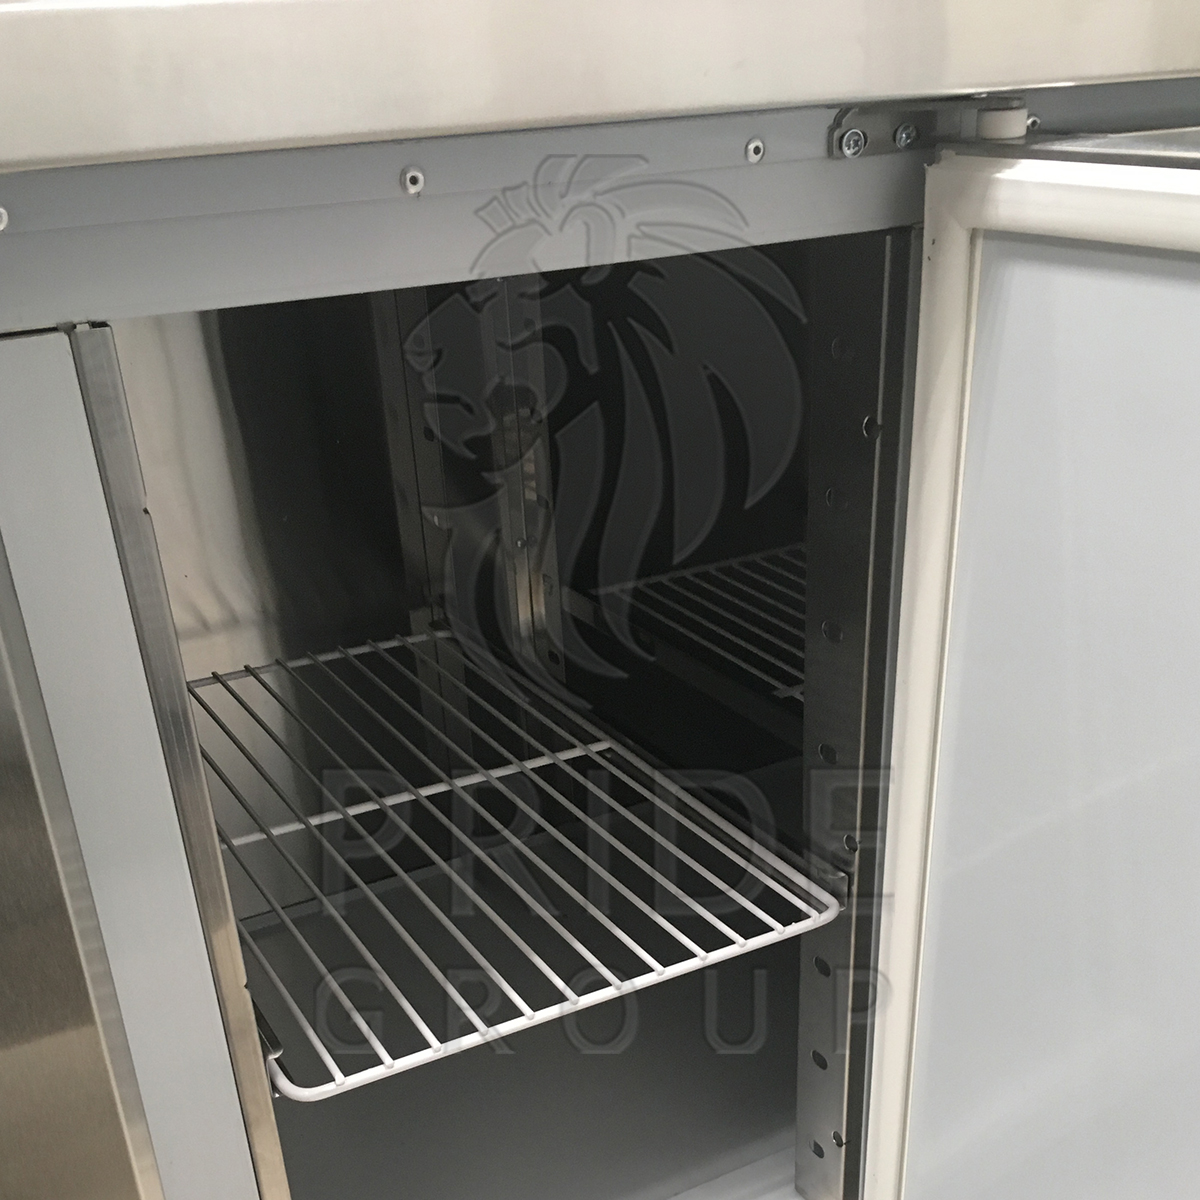 картинка Стол холодильный Finist СХСнст-700-3 нижний агрегат 1485x700x850 мм